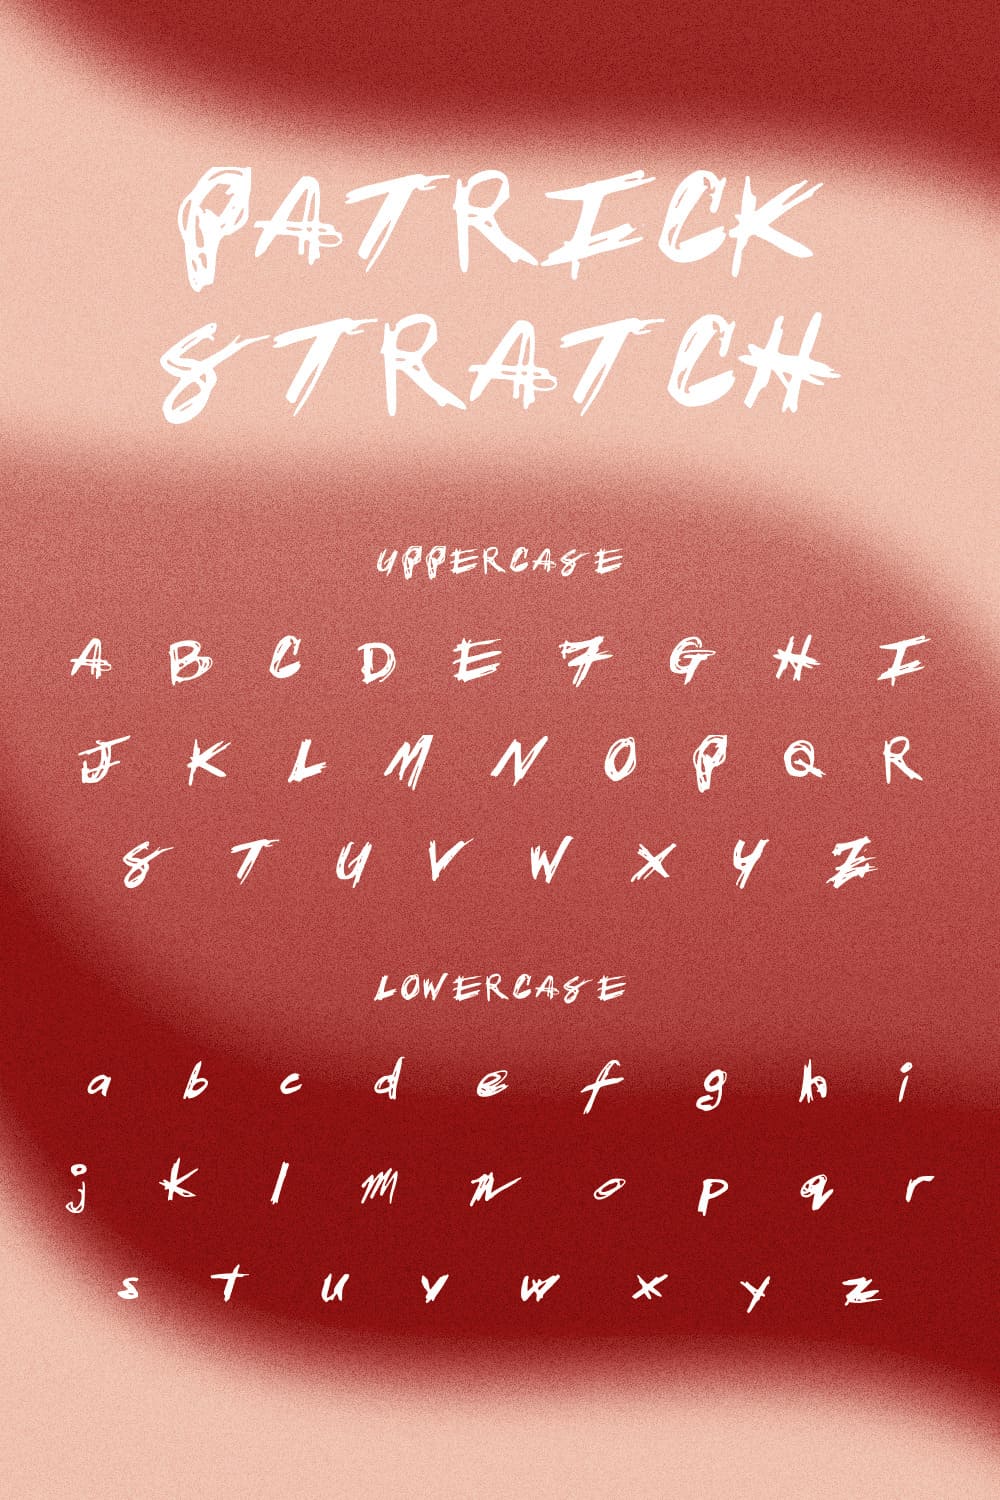 Free Patrick Scratch Font Pinterest MasterBundles Collage Image with alphabet.